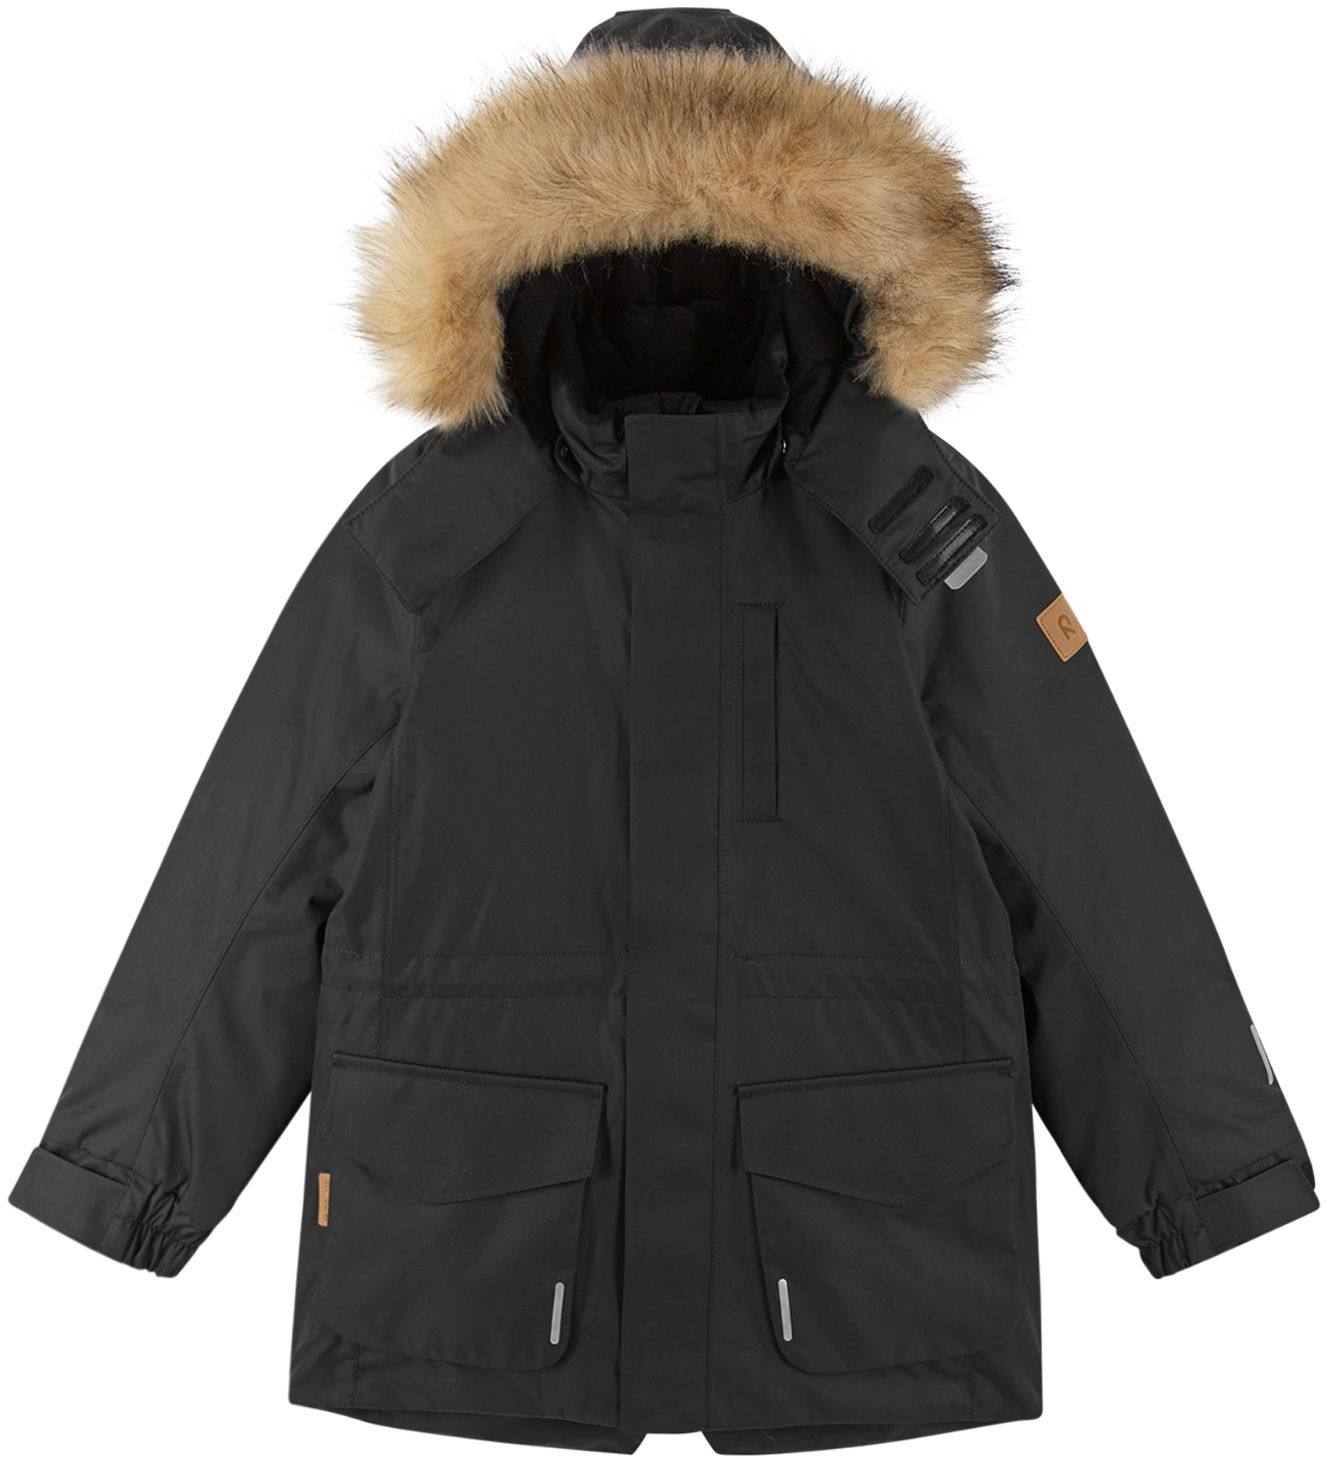 Reima Naapuri Winter Jacket Black 152